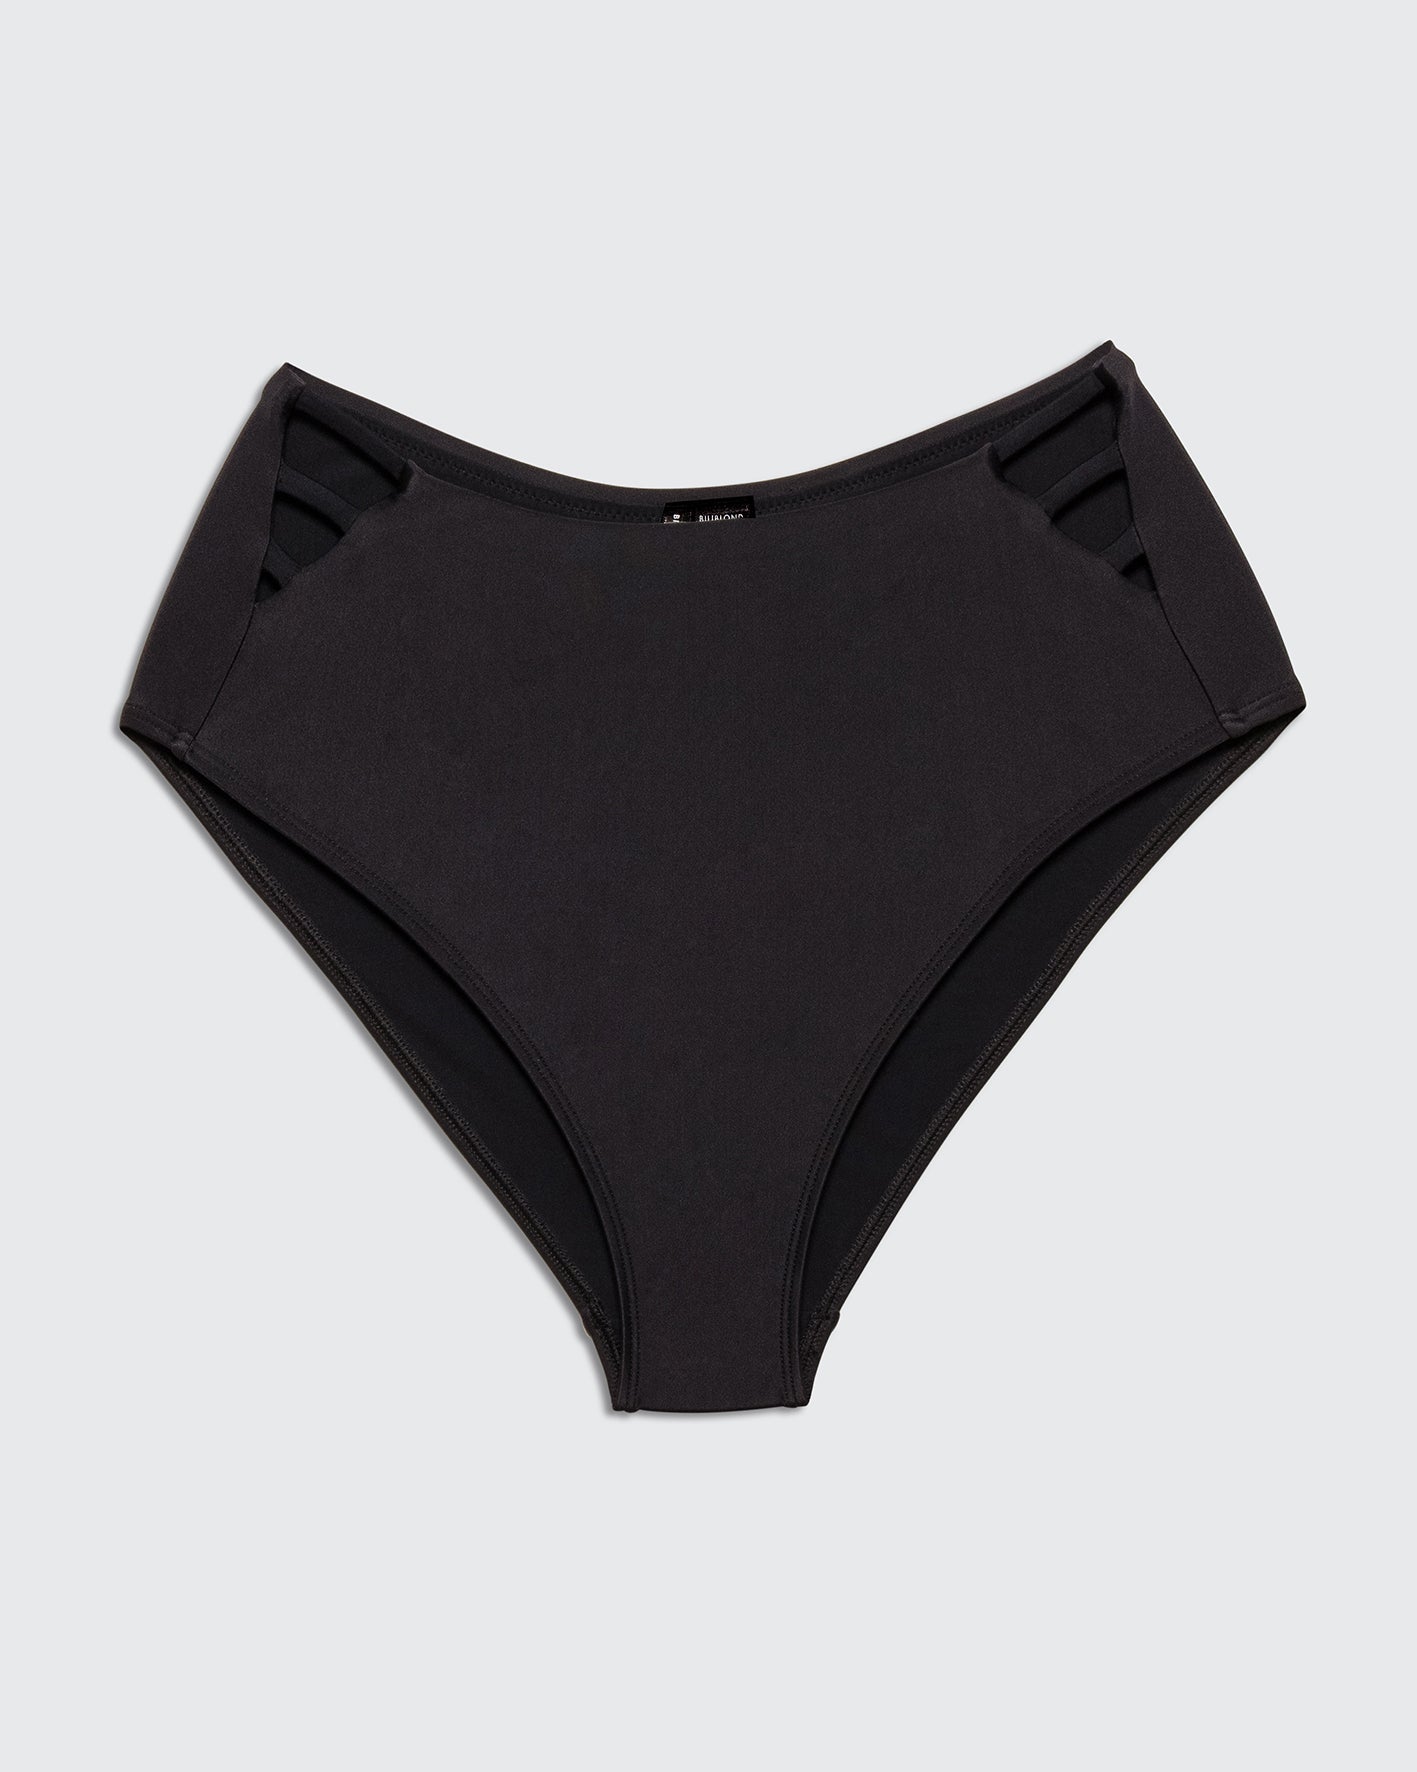 NYANGA BOTTOM BLACK - BIKINI -BiliBlond Swimwear